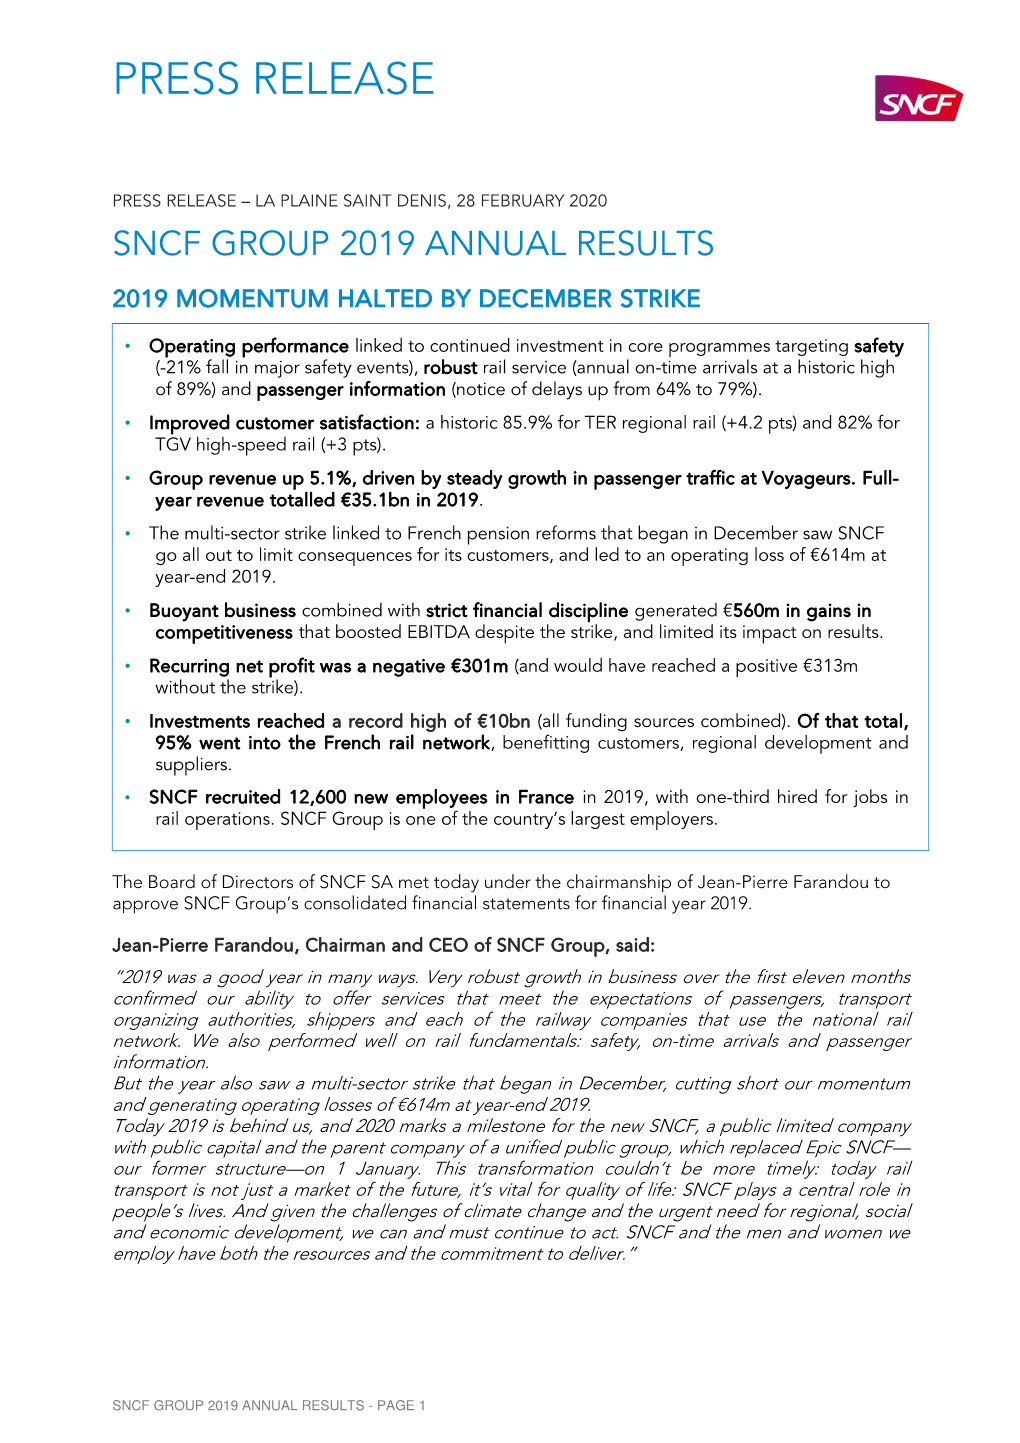 PR SNCF Group FY2019 Results 02.28.2020